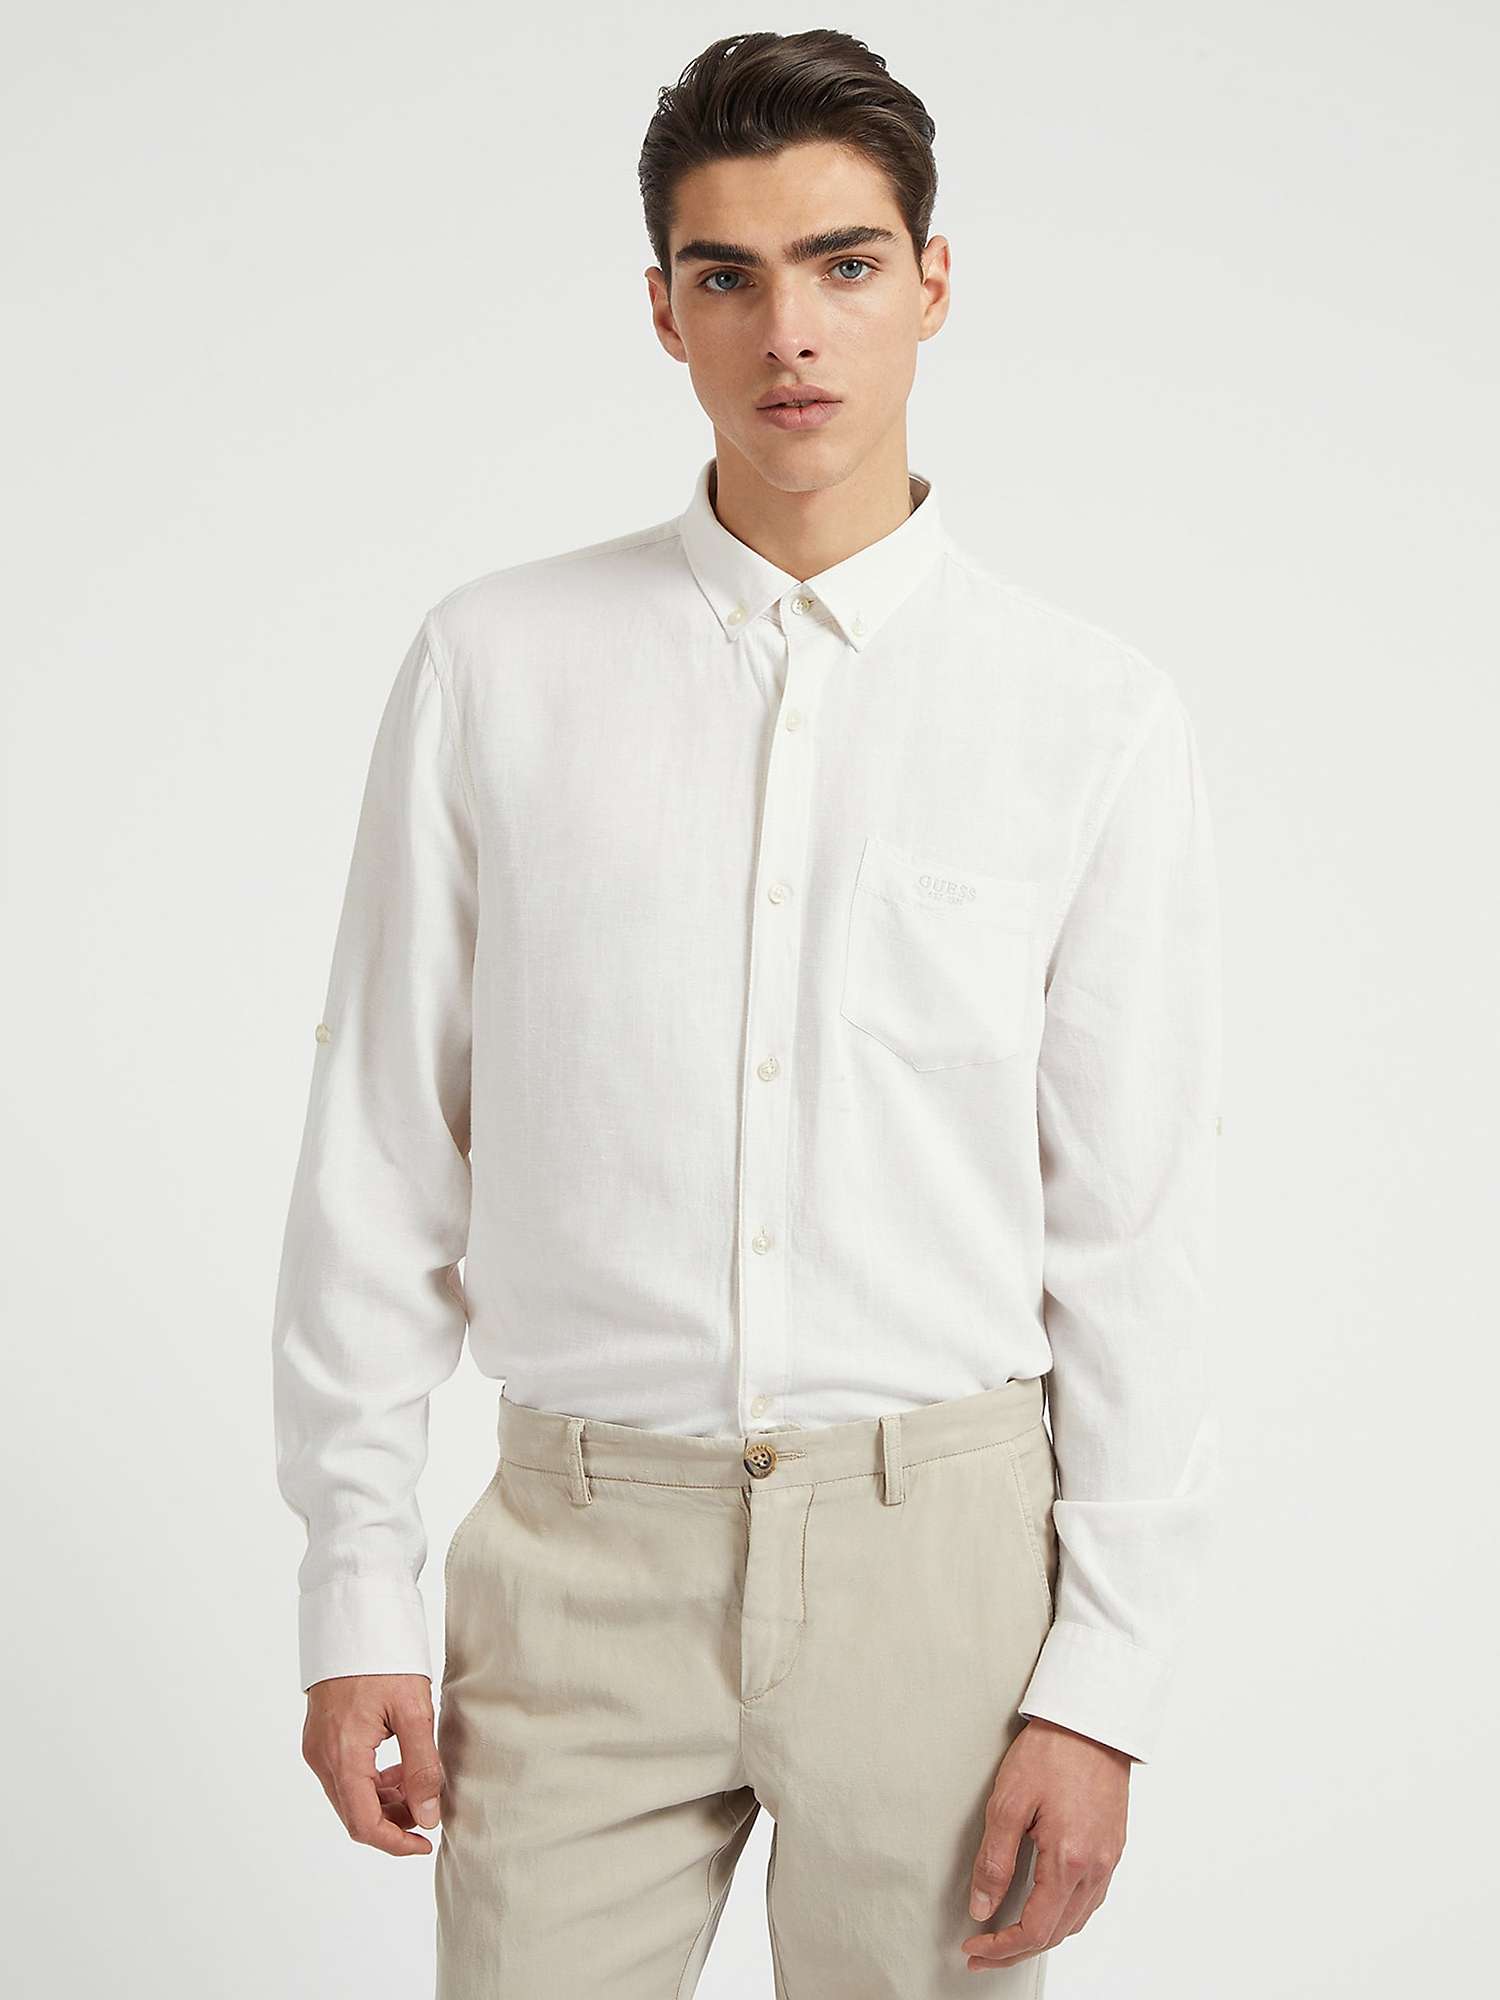 GUESS Long Sleeve Linen Blend Shirt, Pure White at John Lewis & Partners